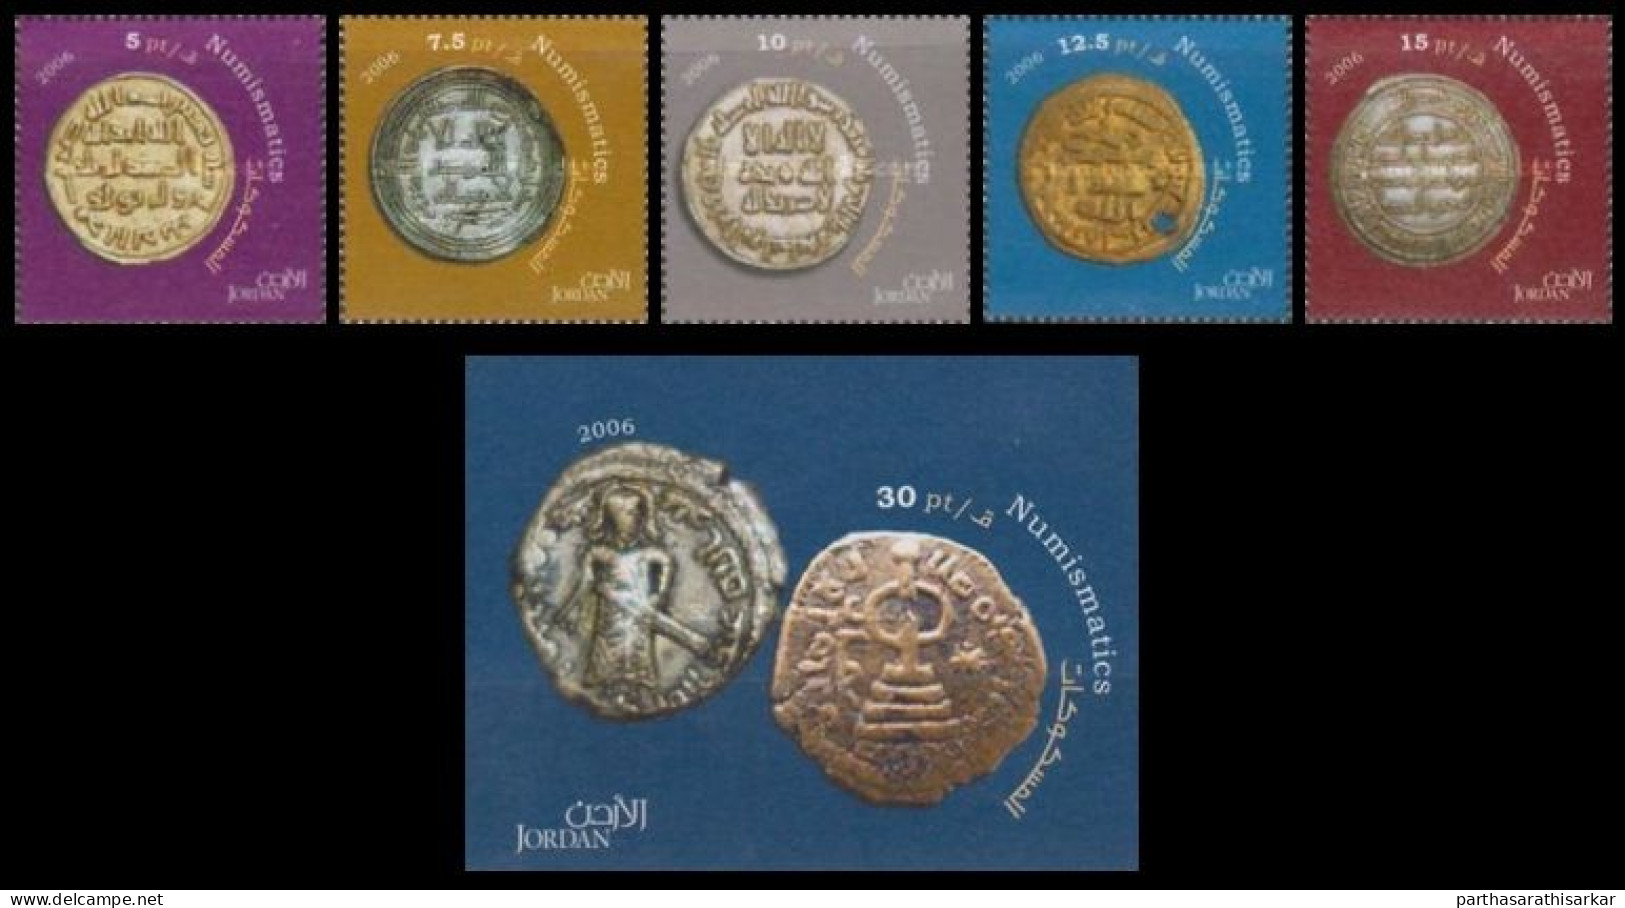 JORDAN 2006 ANCIENT COINS COMPLETE SET WITH MINIATURE SHEET MS MNH - Münzen